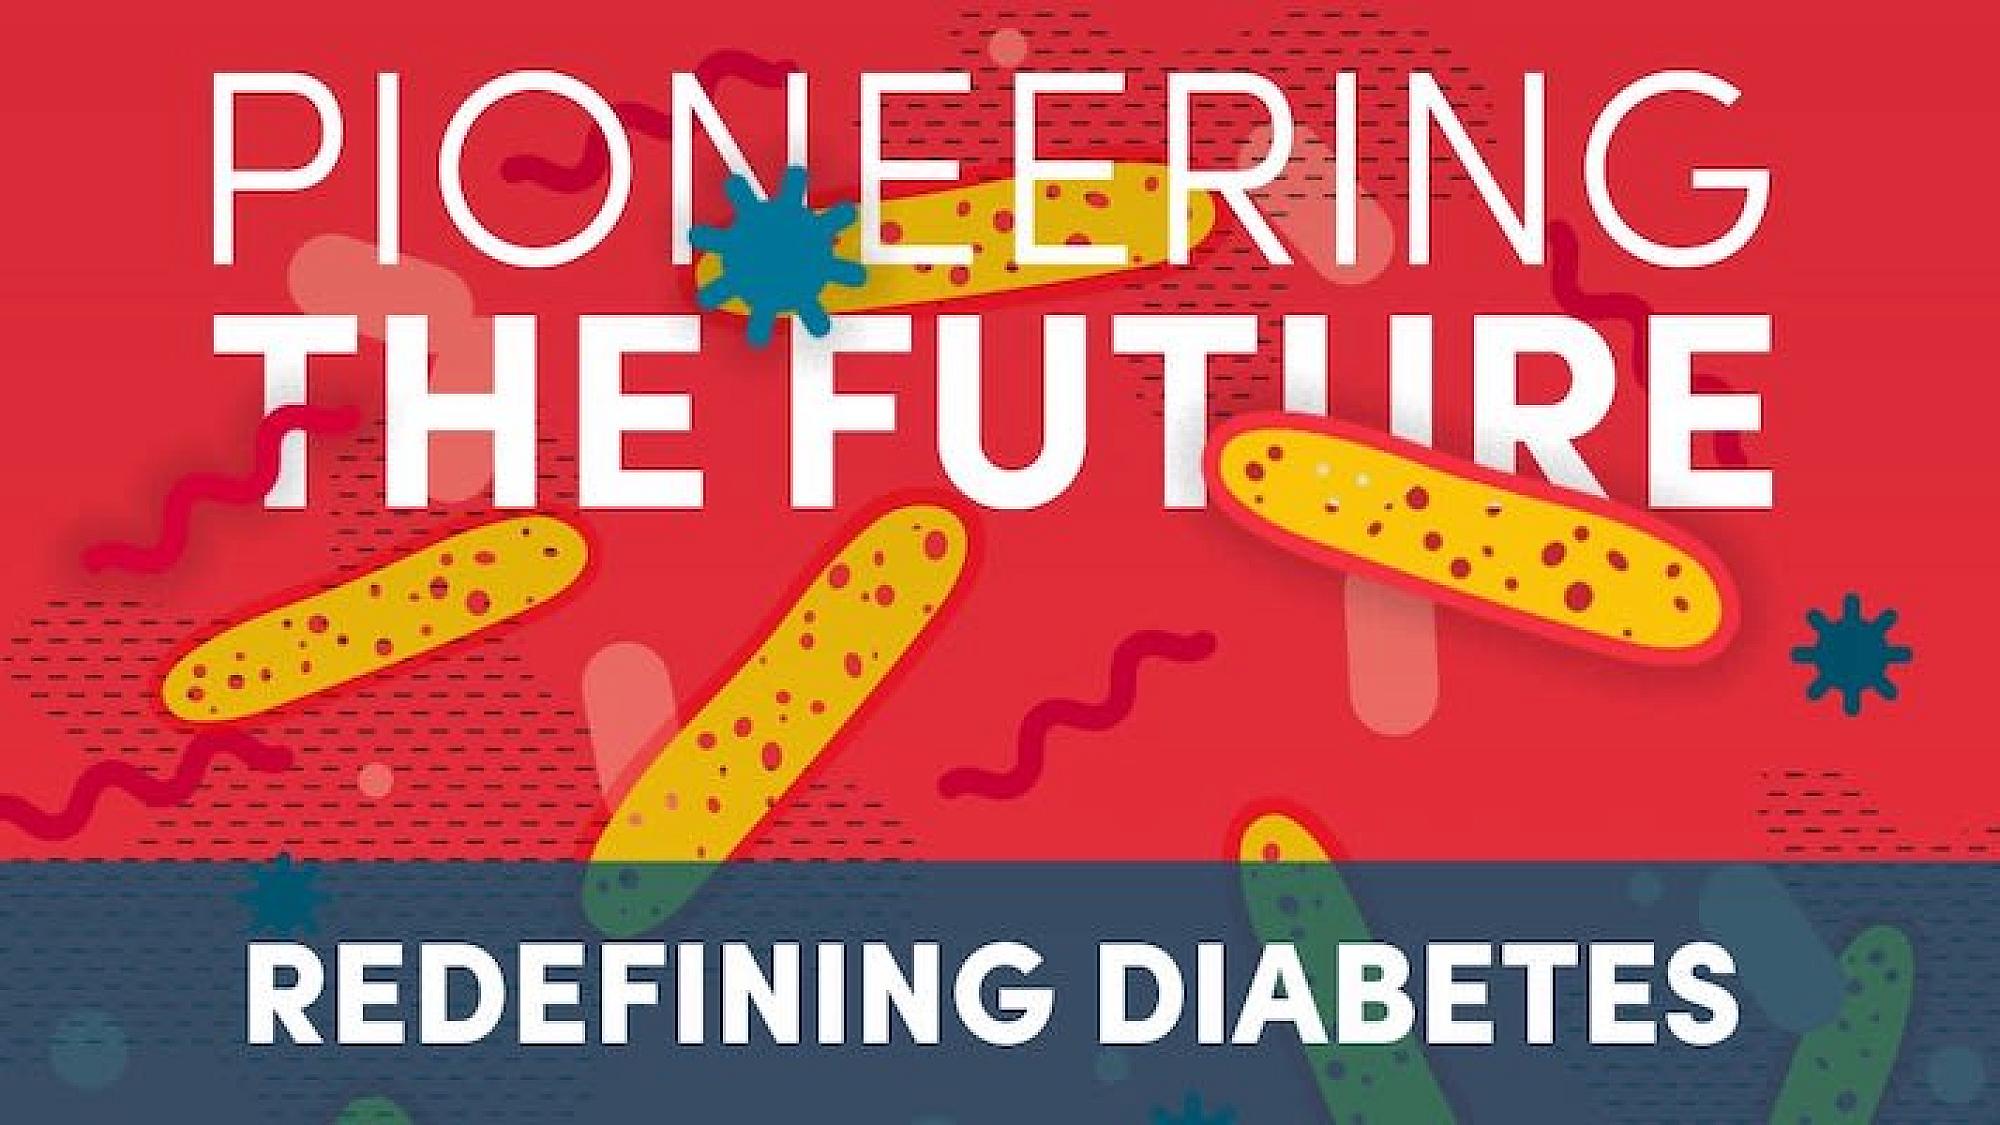 Pioneering the Future: Redefining Diabetes